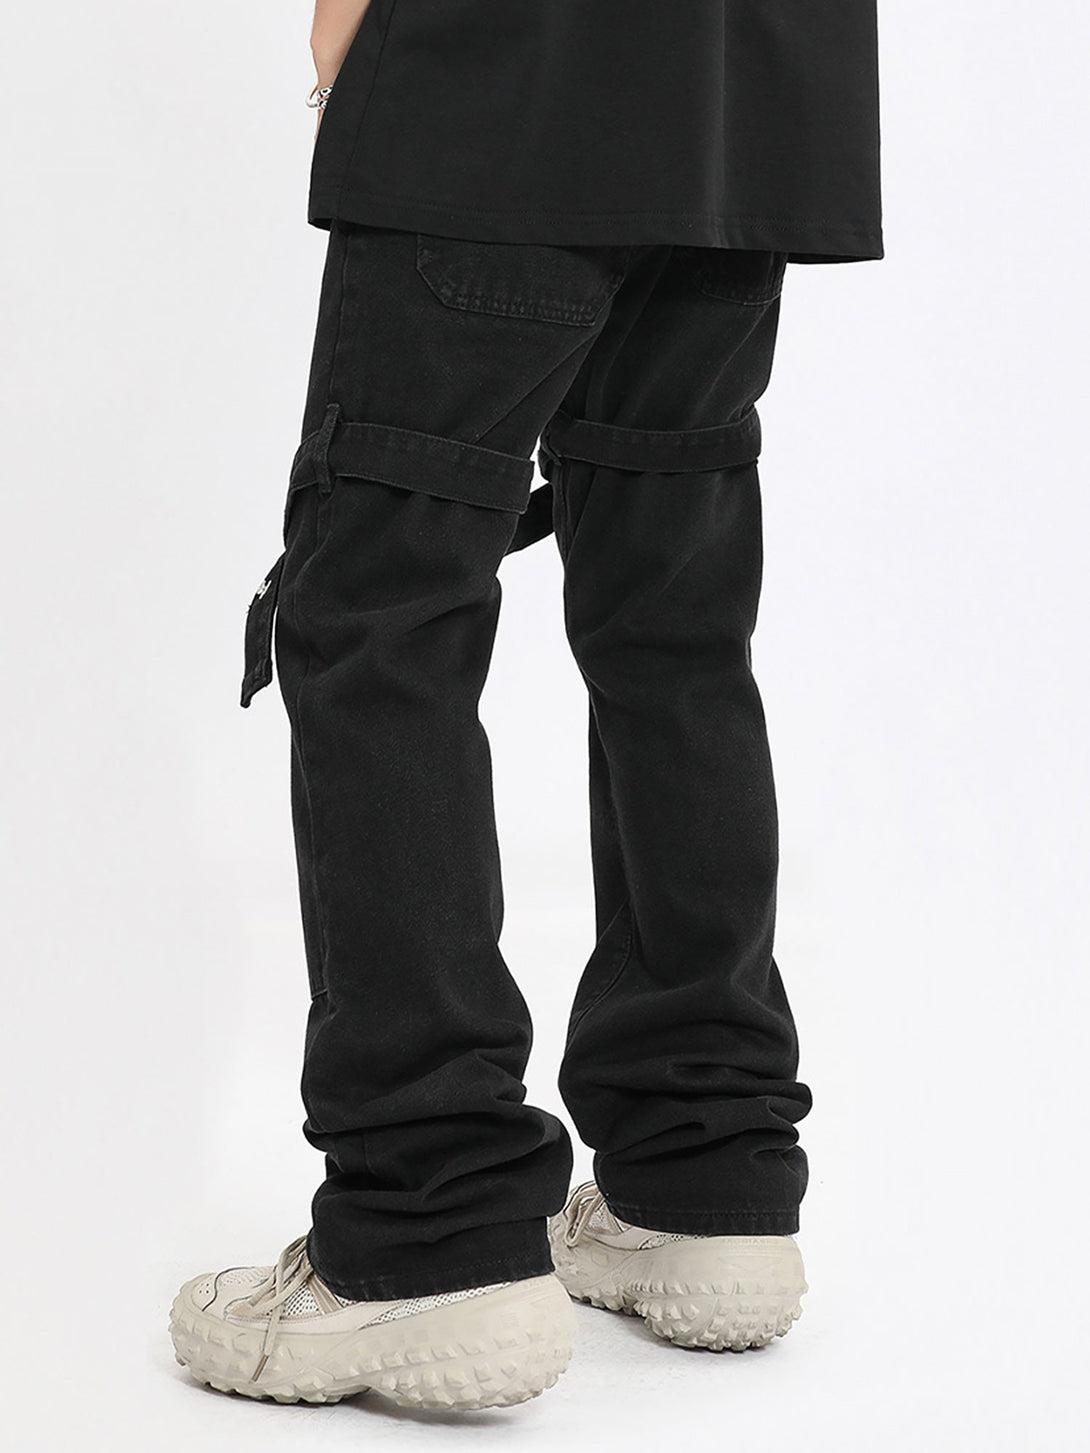 Majesda® - High Street Strappy Straight Leg Casual Work Jeans- Outfit Ideas - Streetwear Fashion - majesda.com